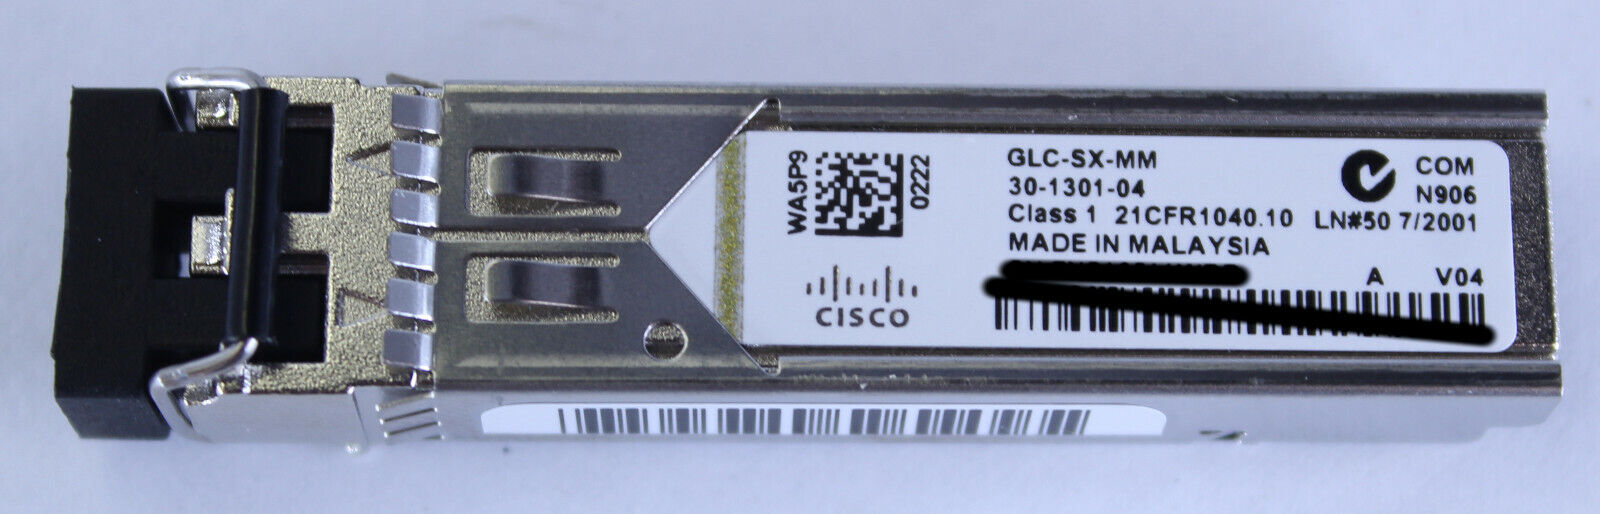 Lot of 11 Cisco GLC-SX-MM 30-1301-04 1G Ethernet Transceiver CNUIAFJAAC OEM Pack